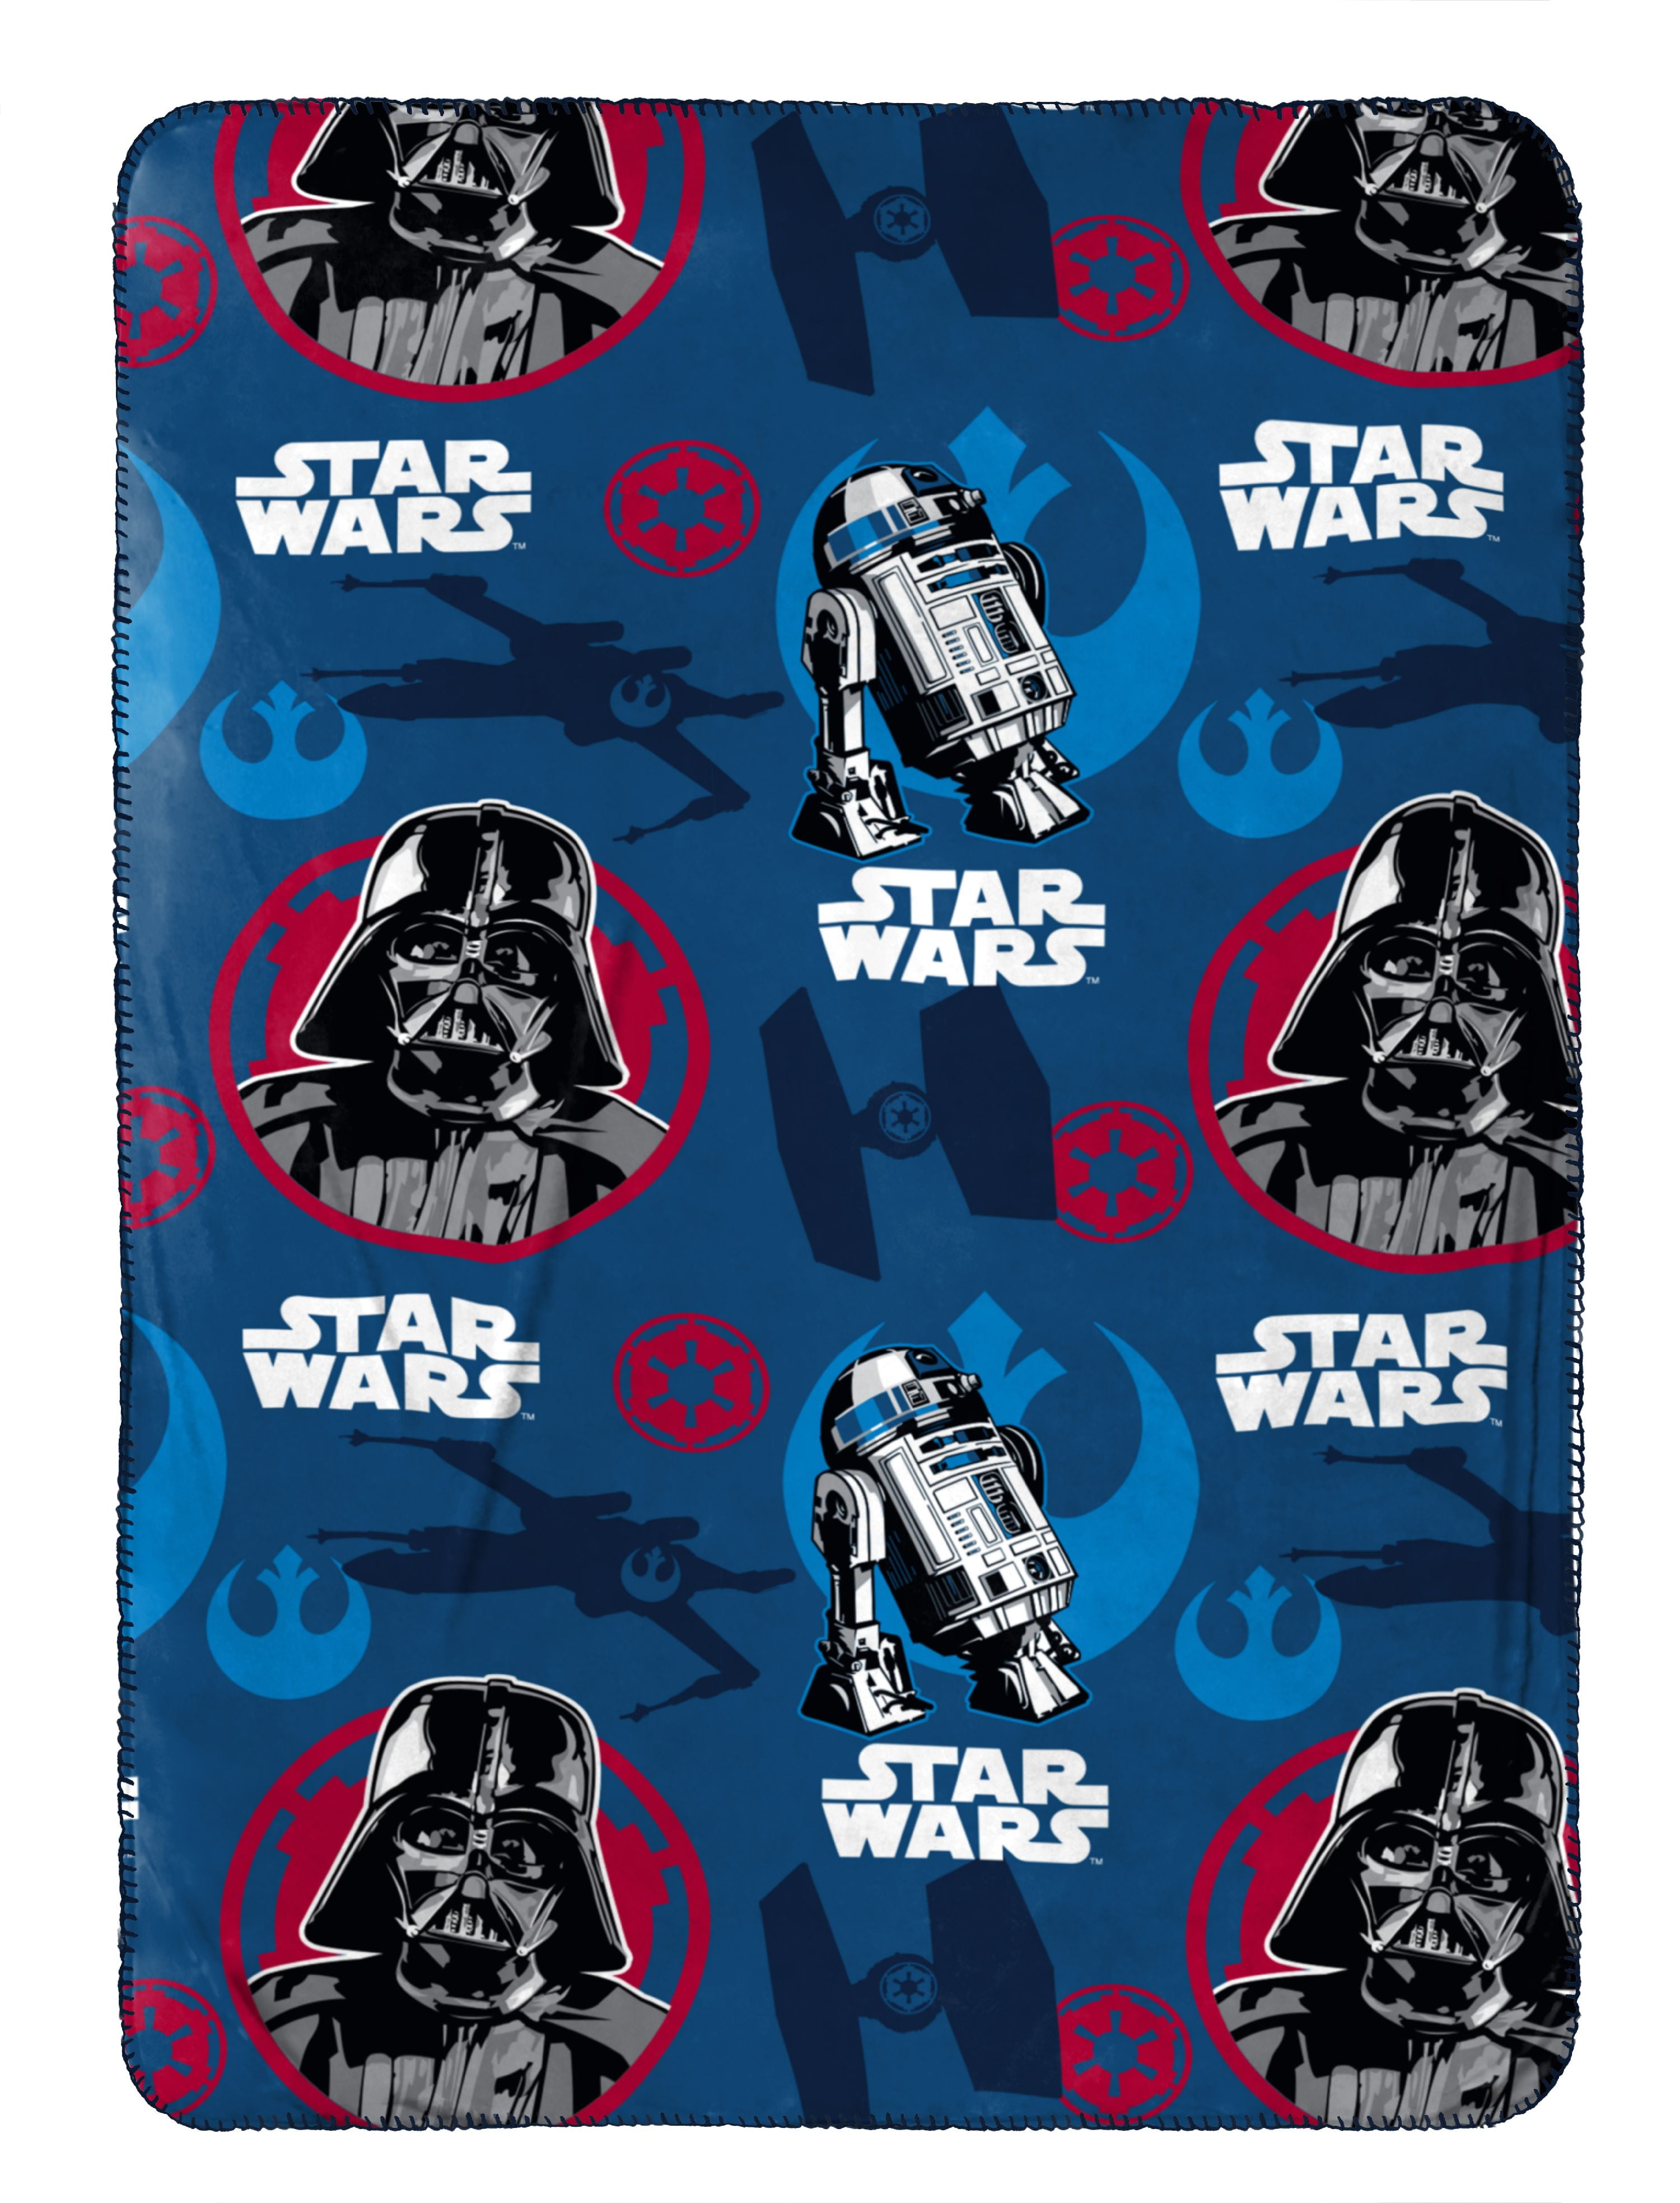 Darth Vader Star Wars Personalised Super Soft Fleece Baby Blanket 